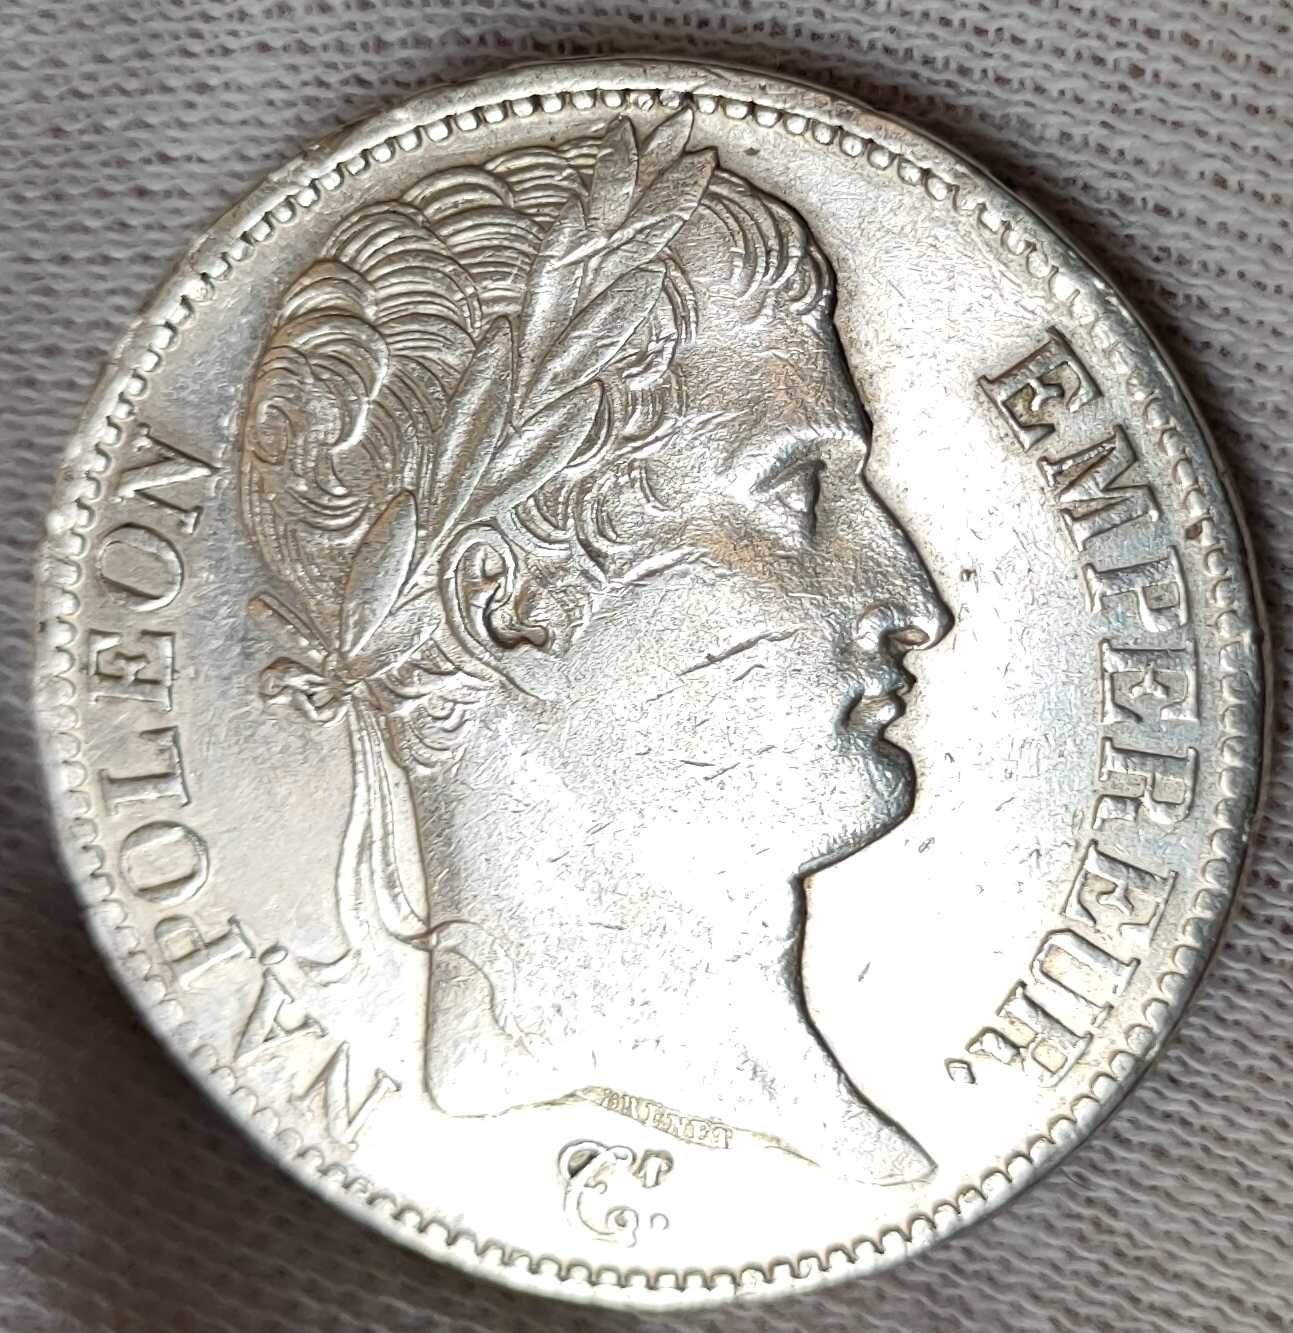 Napoleon I 5 francs (franków) Francja 1809 A